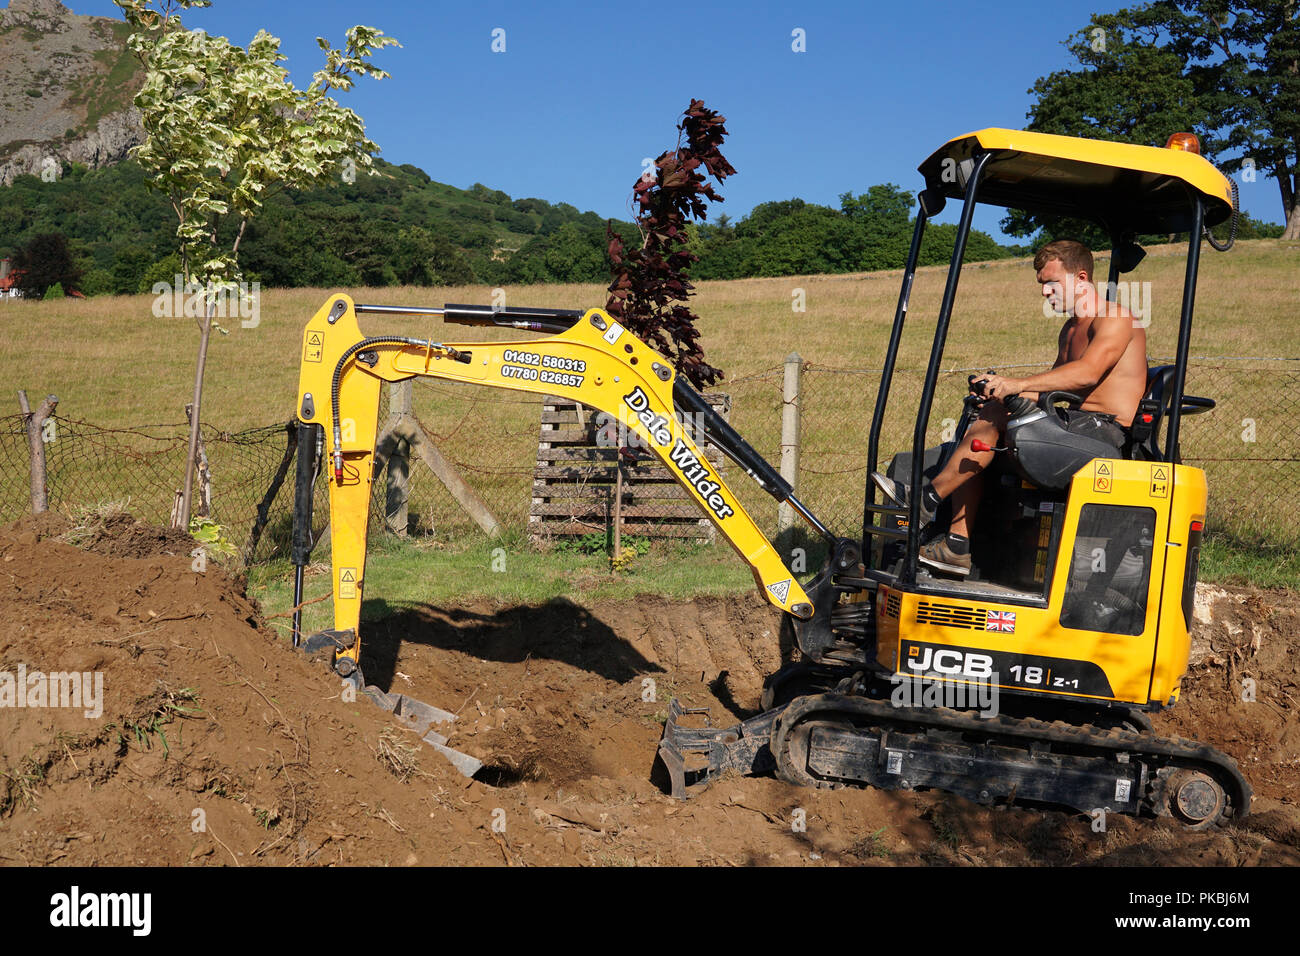 JCB Z-1 Mini digger, making light of excavating. Image taken in July 2018. Stock Photo